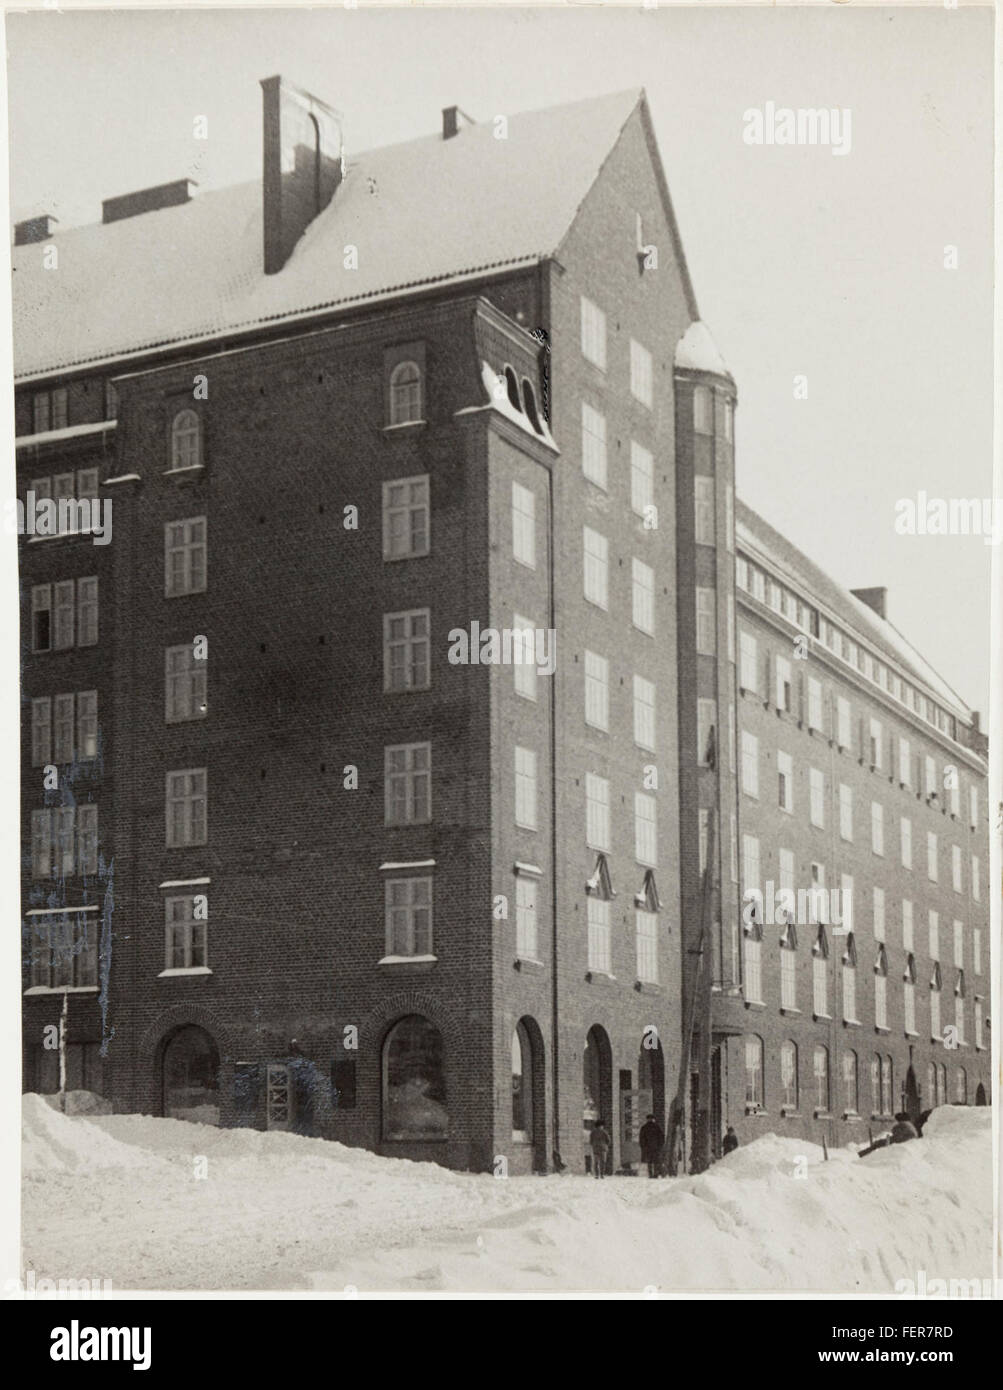 Architecture history collection wintry Helsinki street corner Stock Photo